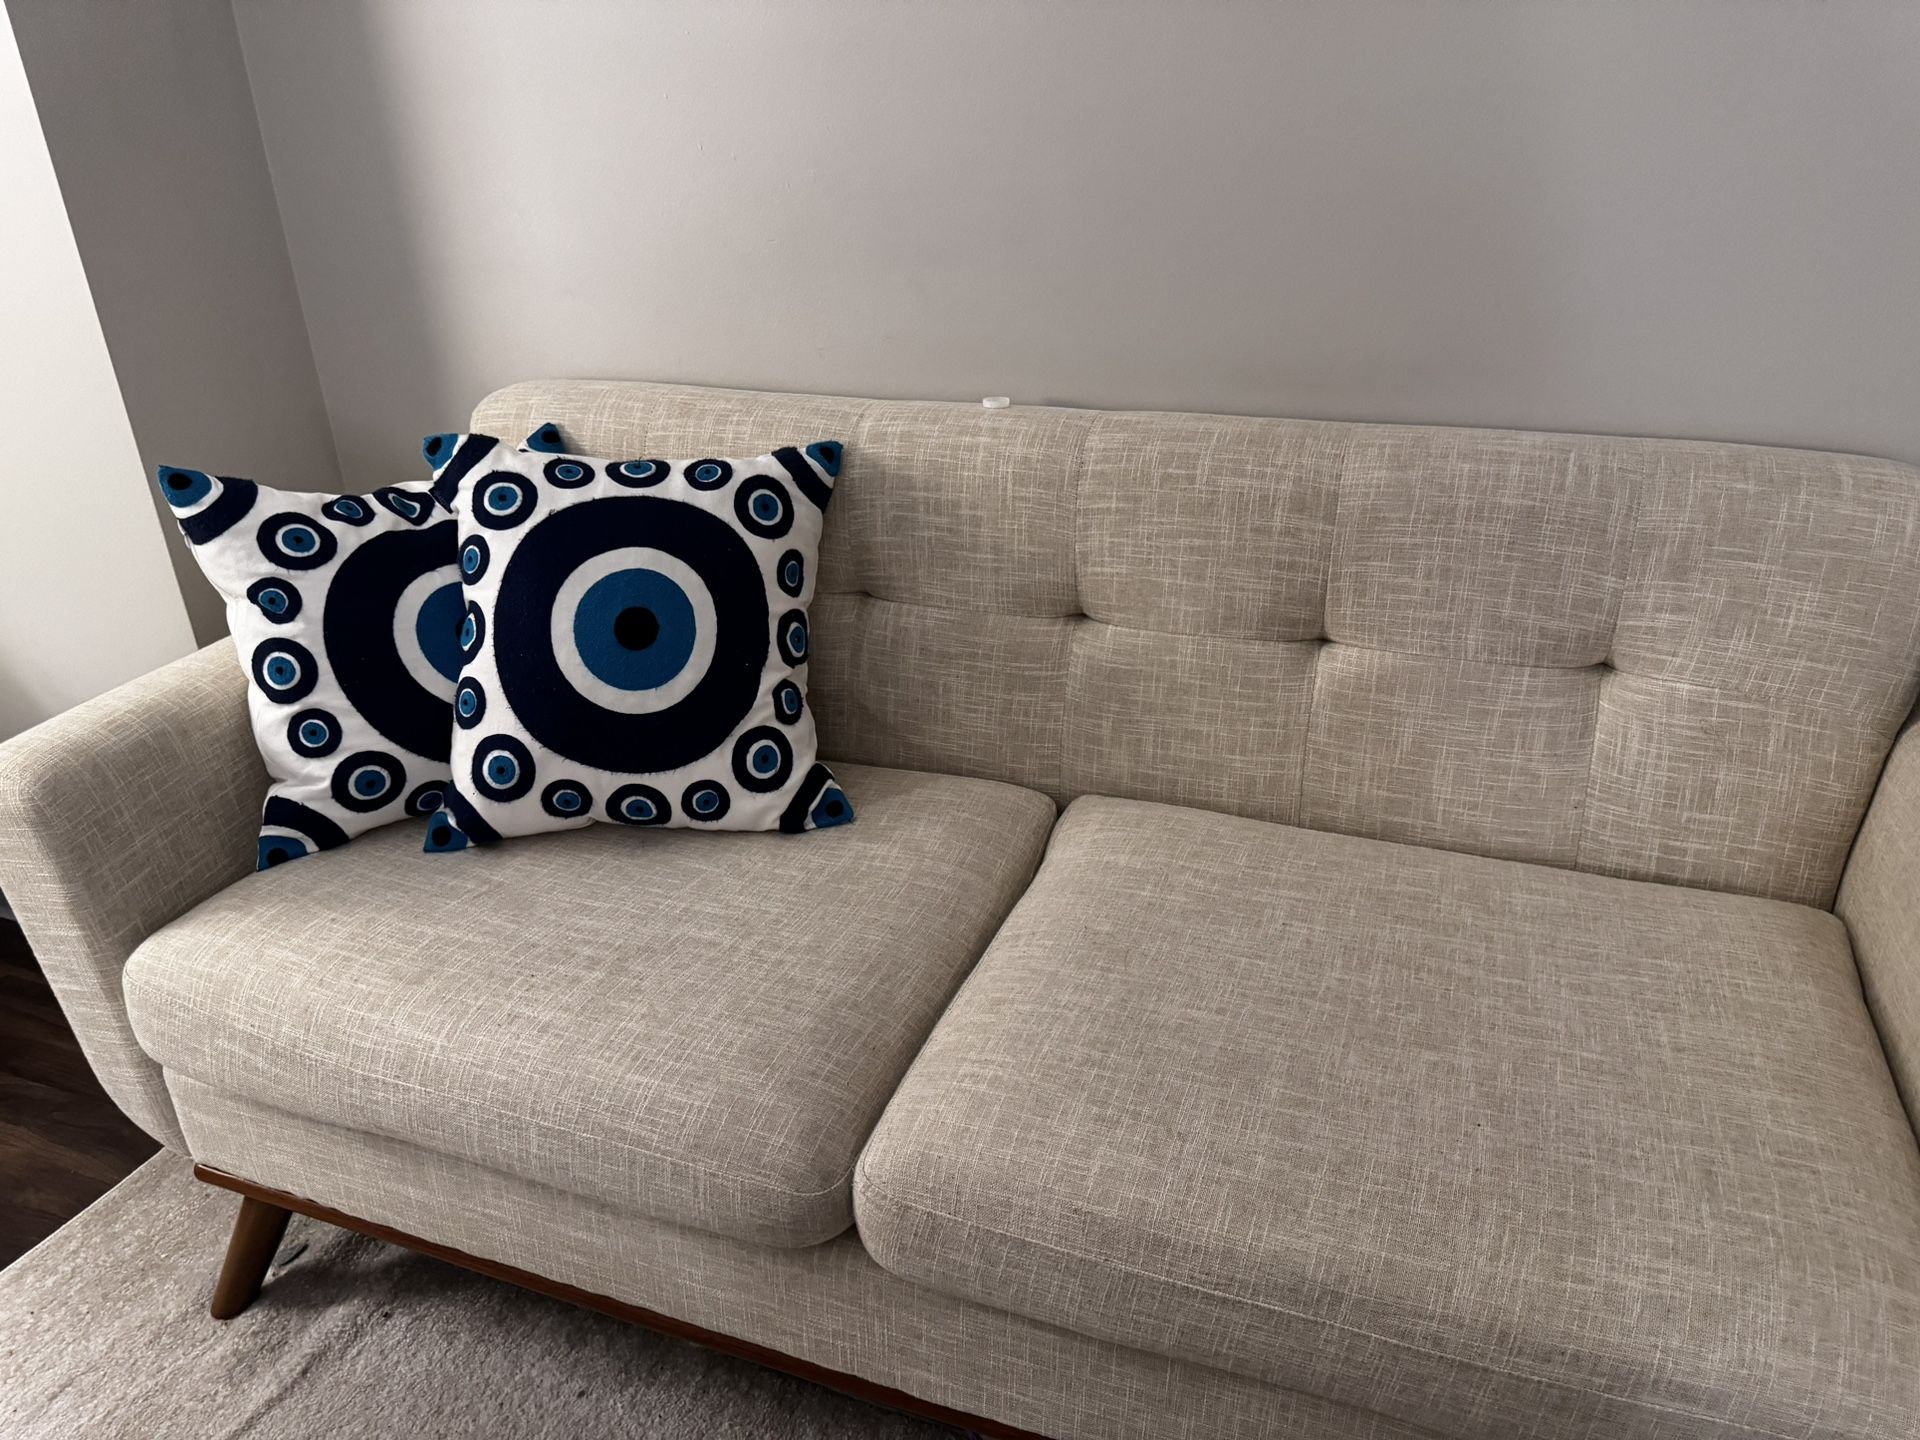 Beige Amazon Basics Couch